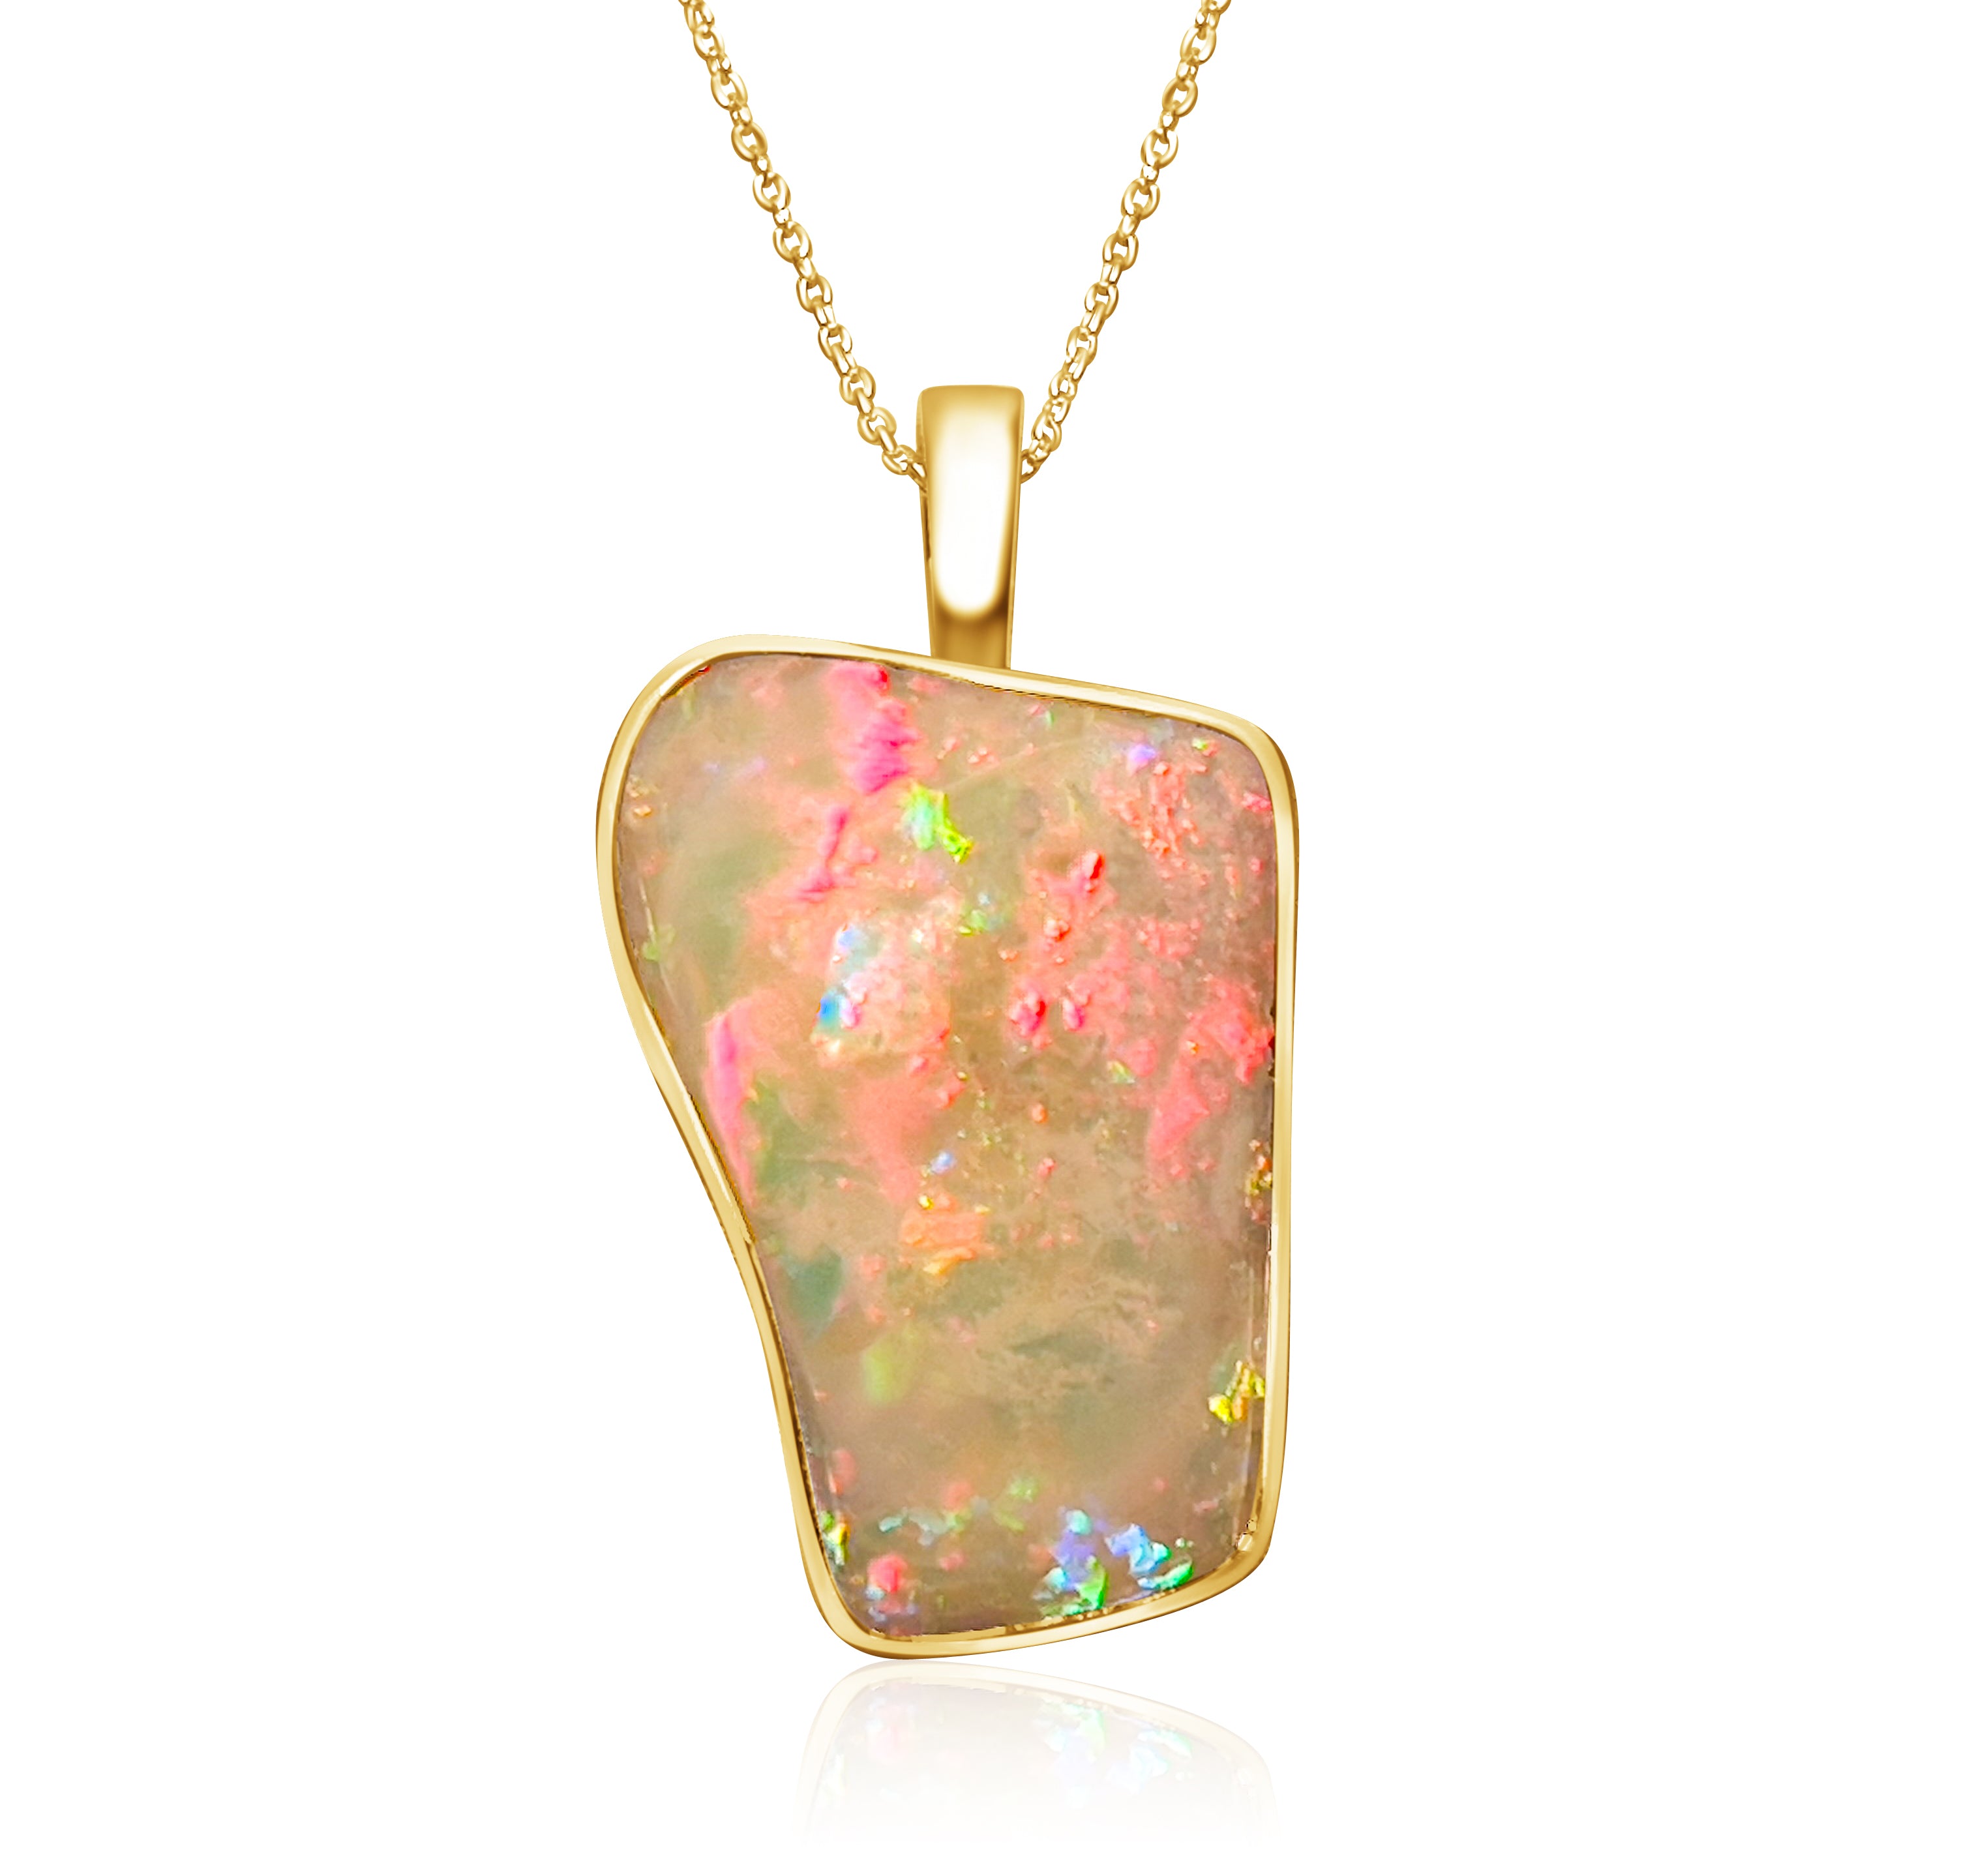 18kt Yellow Gold White Opal freeform 20.5ct pendant enhancer - Masterpiece Jewellery Opal & Gems Sydney Australia | Online Shop